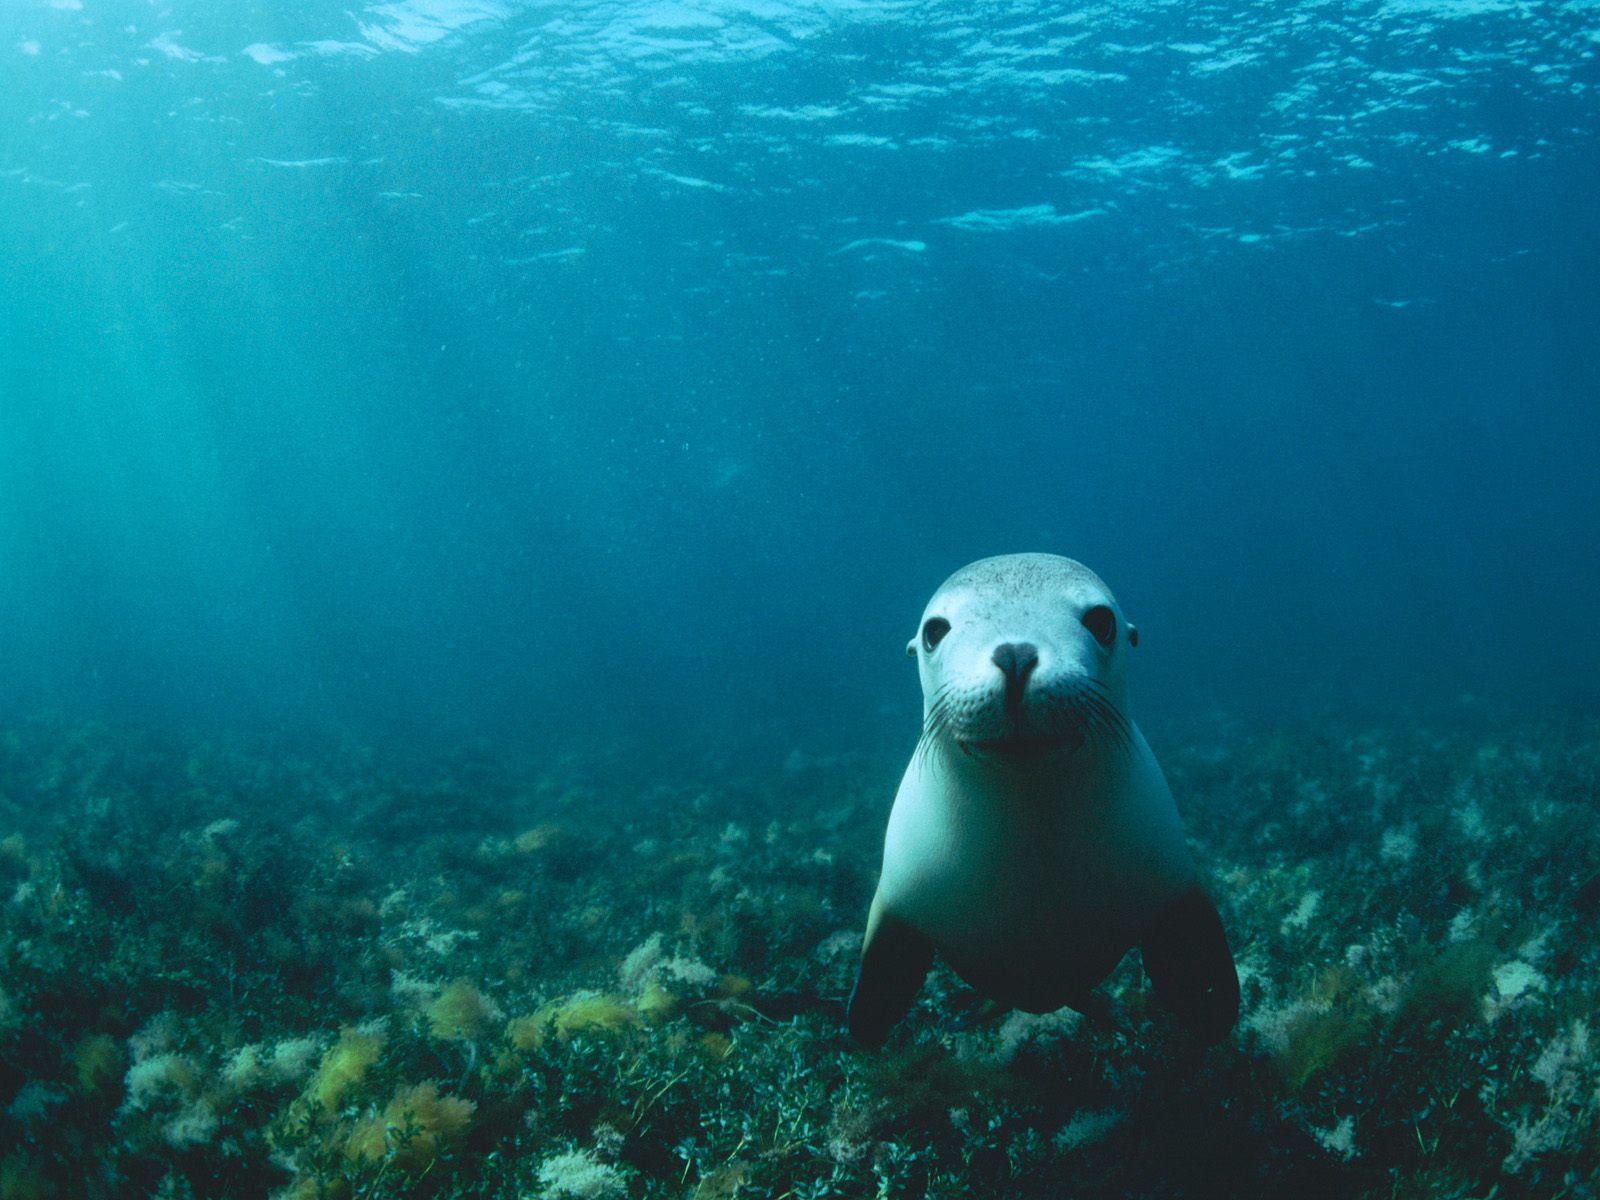 Sea lion under water free desktop background wallpaper image